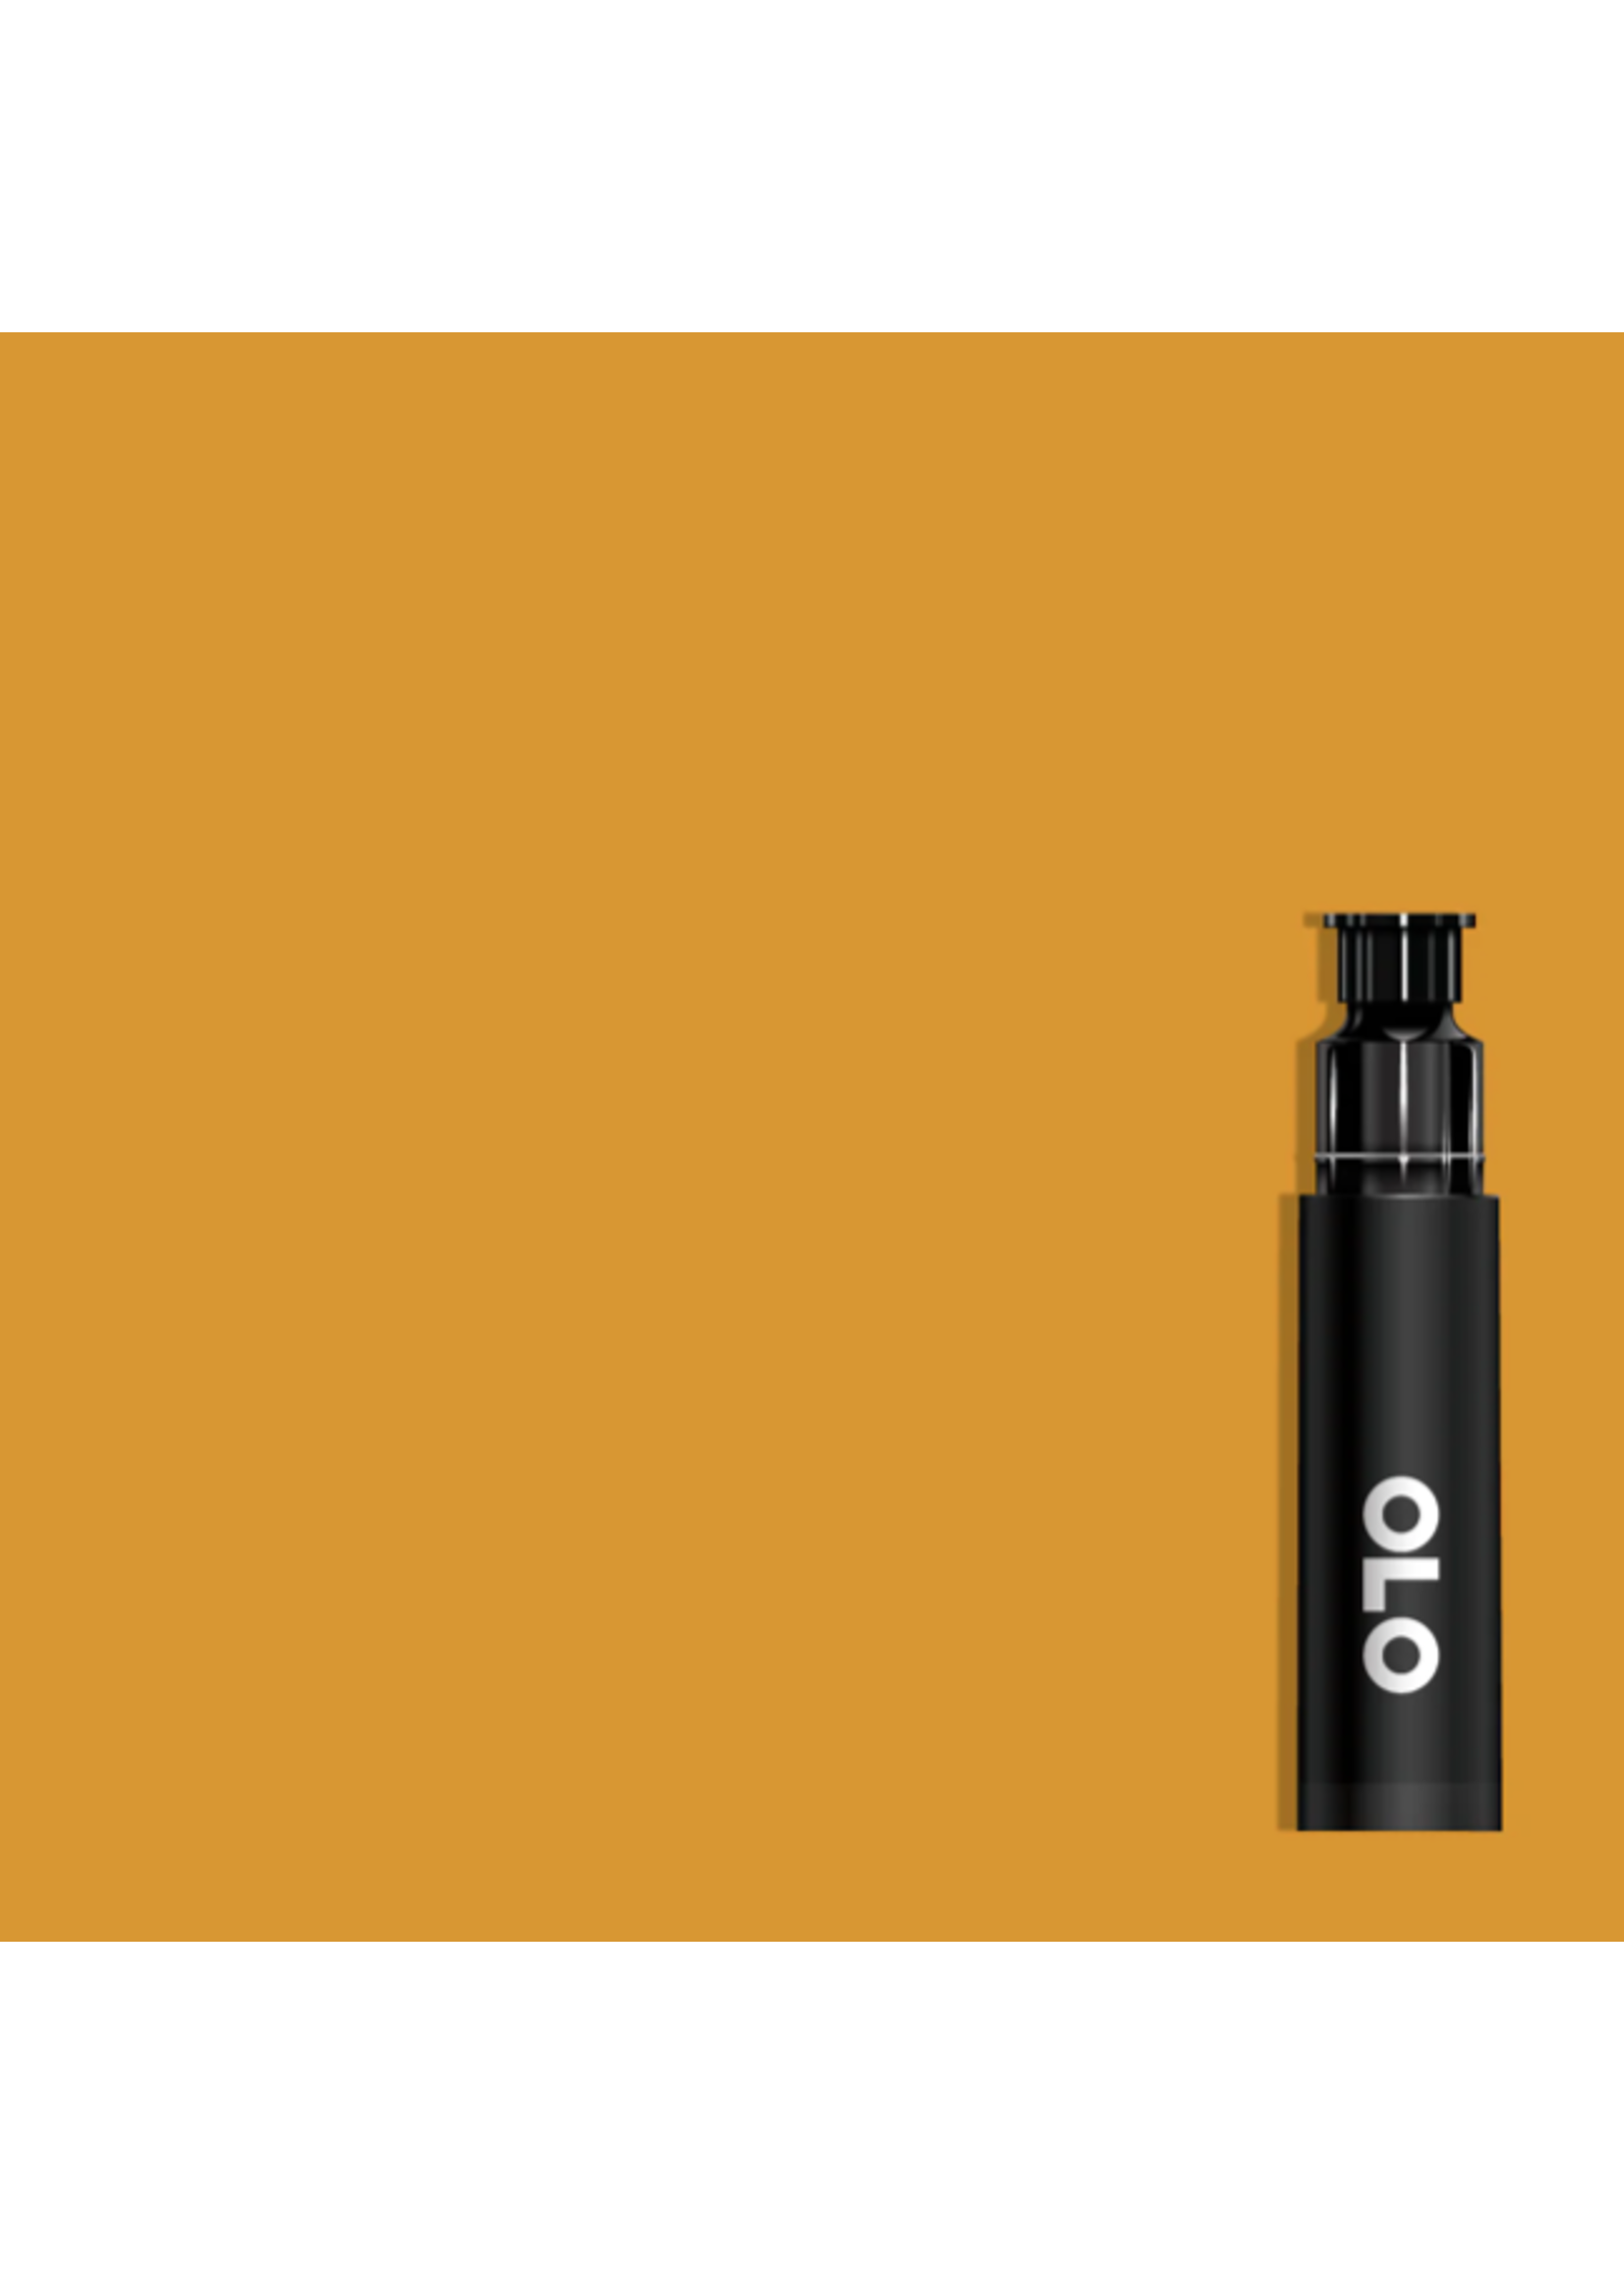 OLO OLO Brush Replacement Cartridge: Yellow Ochre